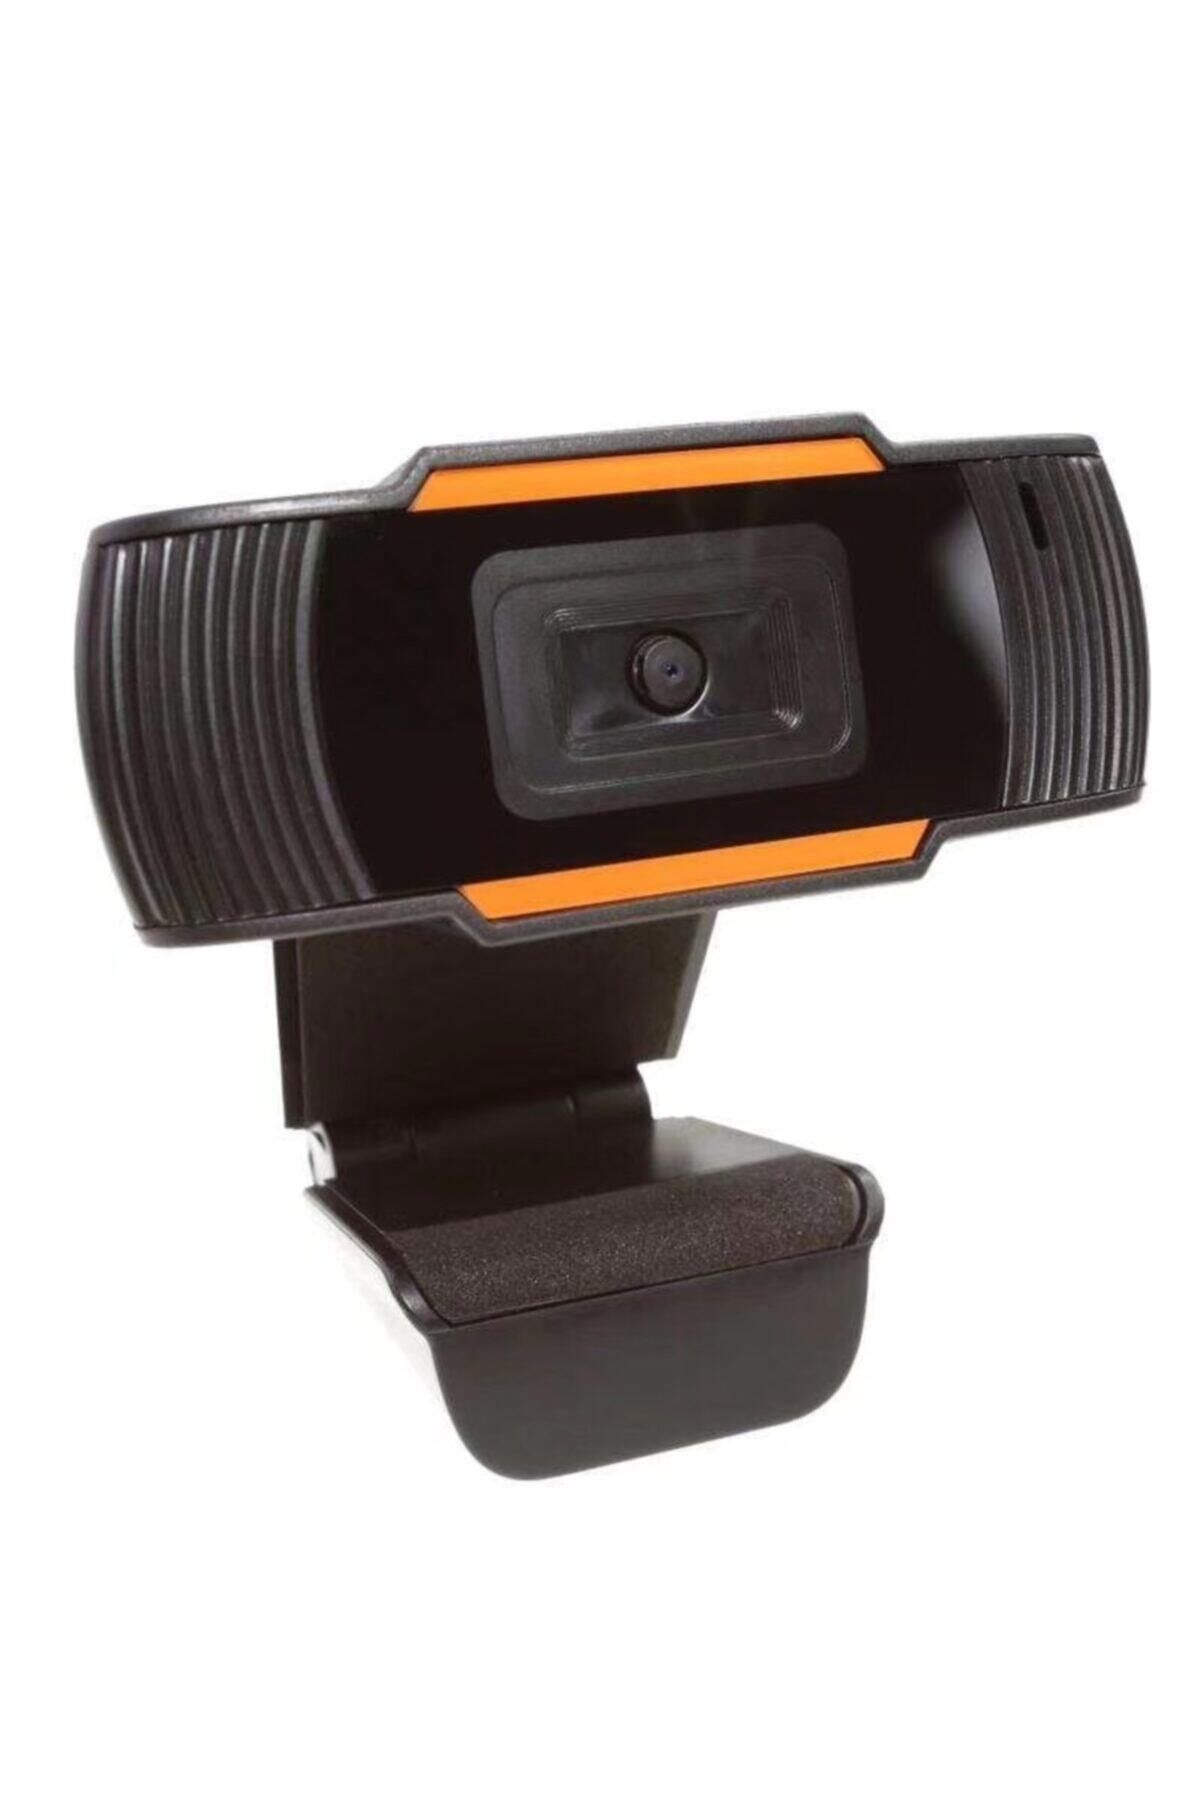 Genel Markalar Webcam Cover Web Camera Hd 720p Pc Camera Usb Hd Cam Laptop Skype